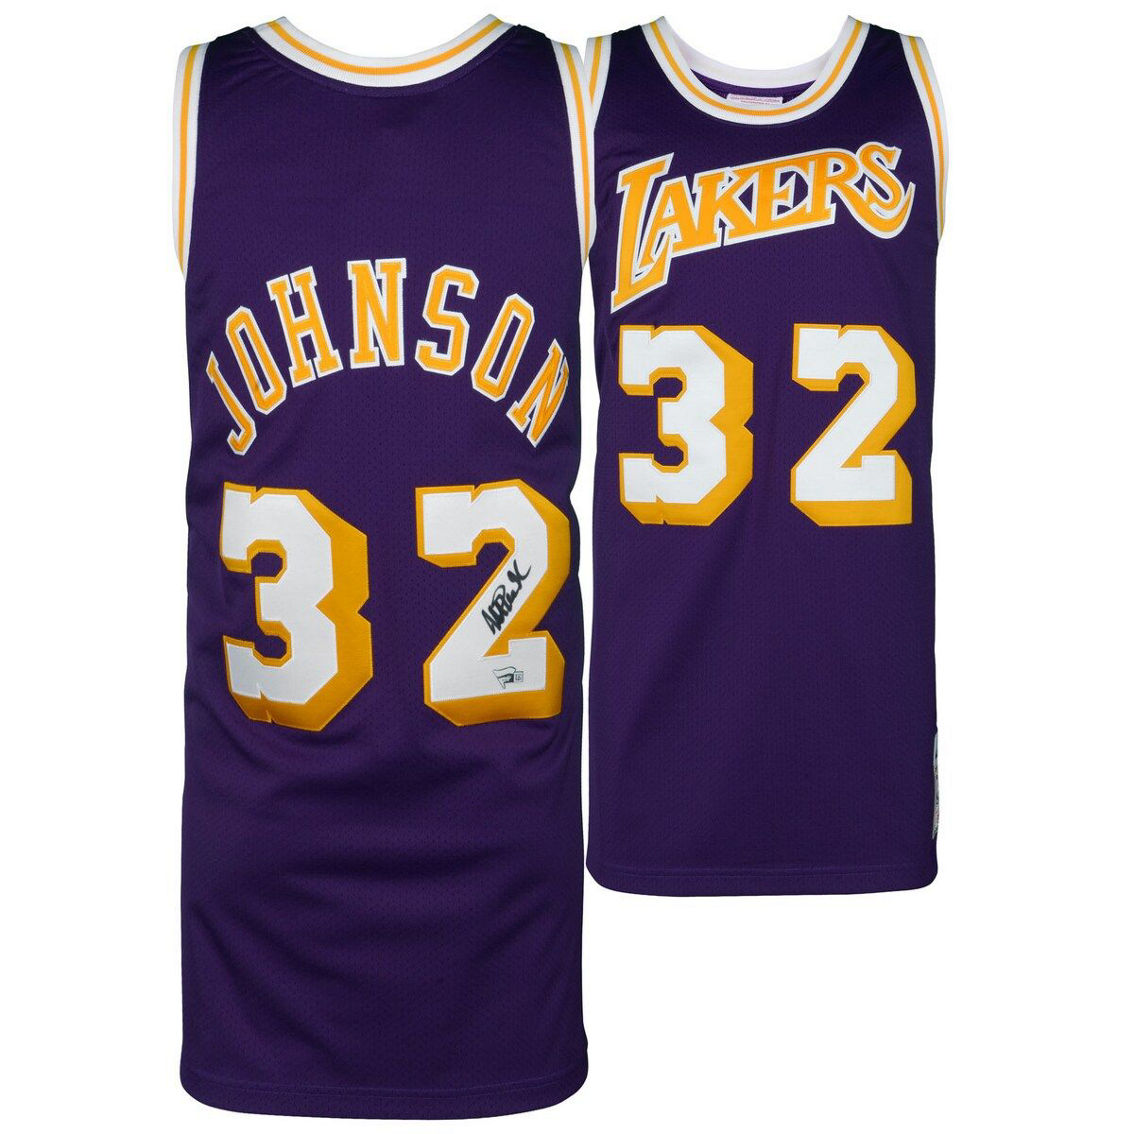 Fanatics Authentic Magic Johnson Los Angeles Lakers Autographed Purple Authentic Jersey - Image 2 of 4